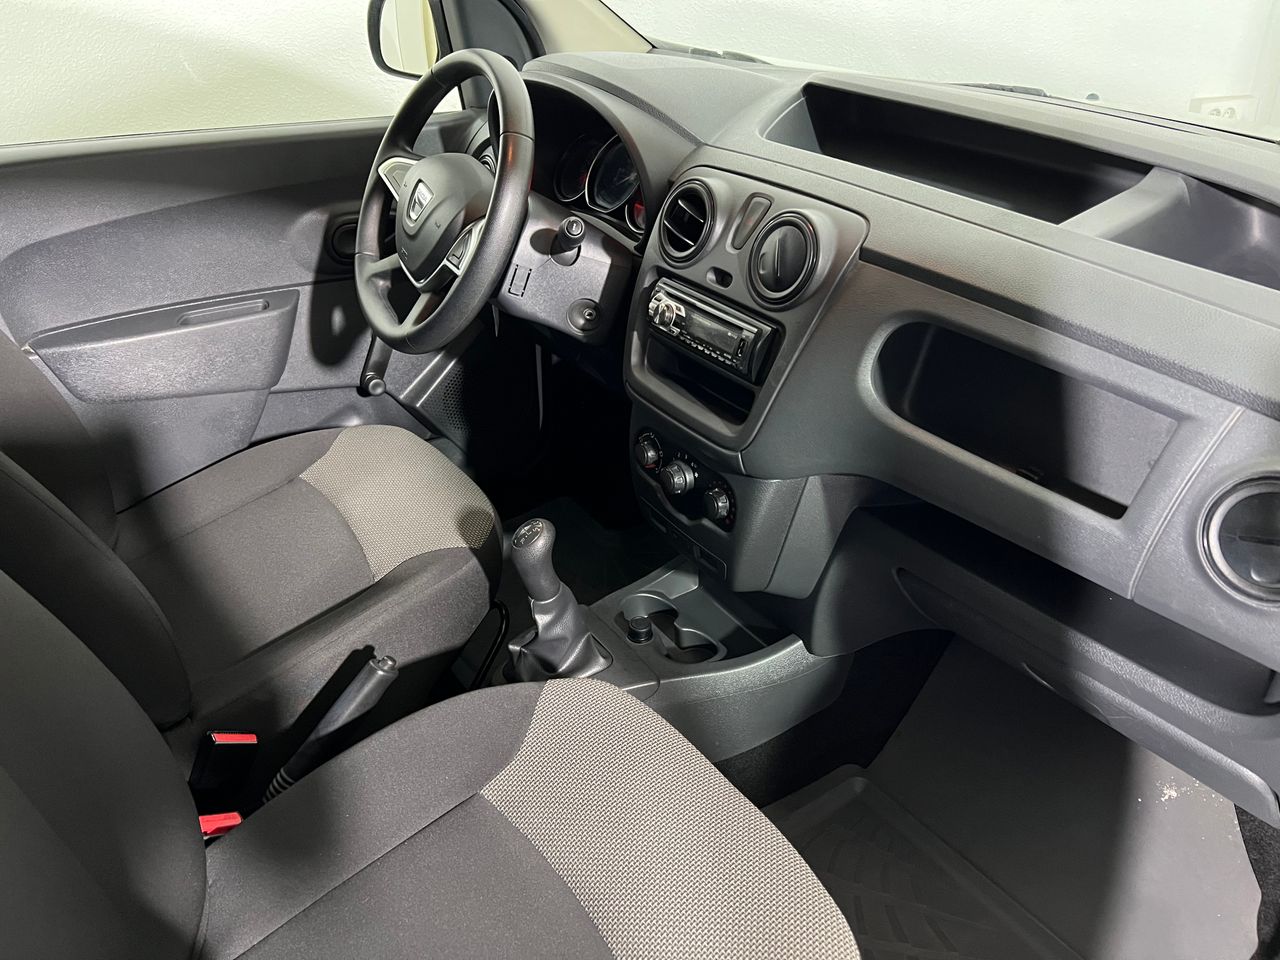 Dacia Dokker Base 1.6 75kW (101CV) 2017